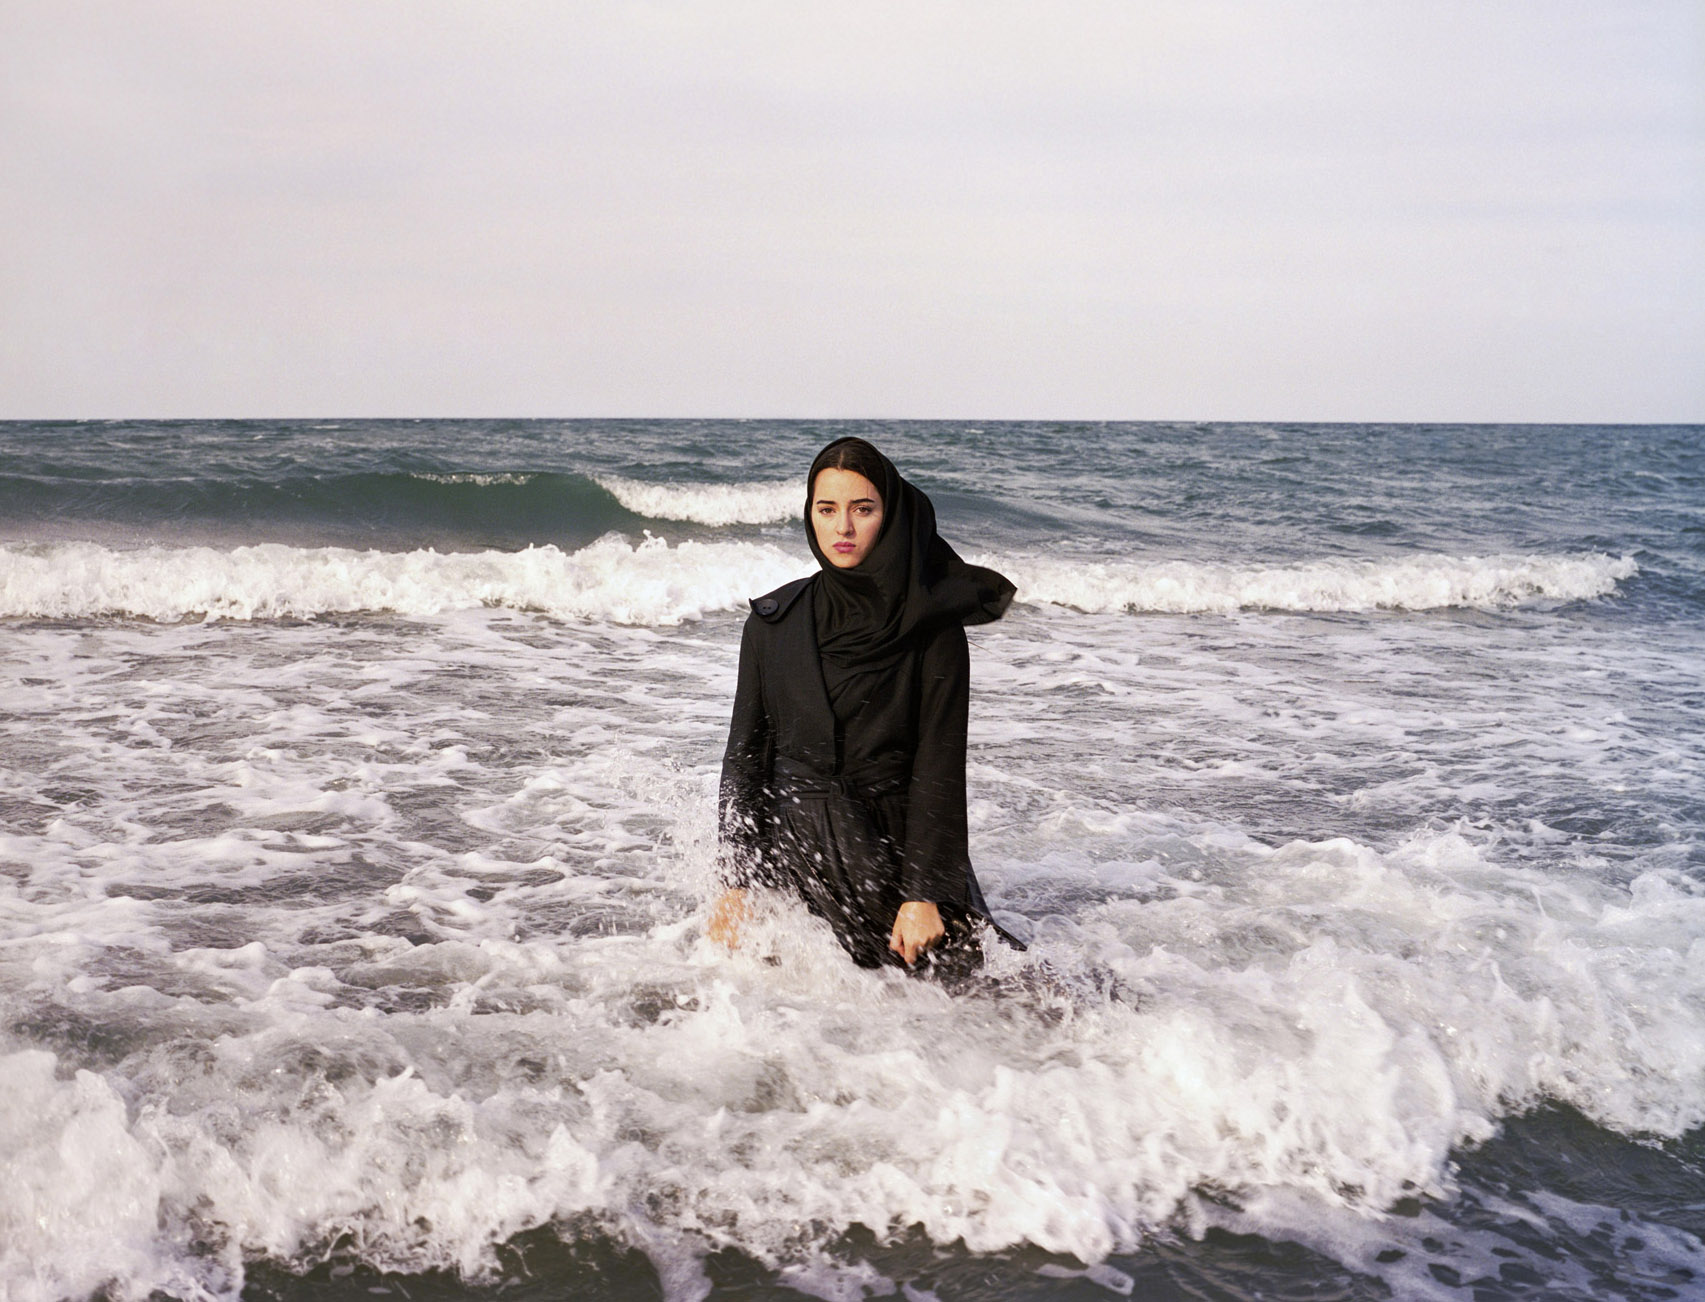 Newsha Tavakolian. Imaginary CD cover for Sahar. Caspian Sea. Mahmoudabad, Iran. 2011. © Newsha Tavakolian / Magnum Photos.